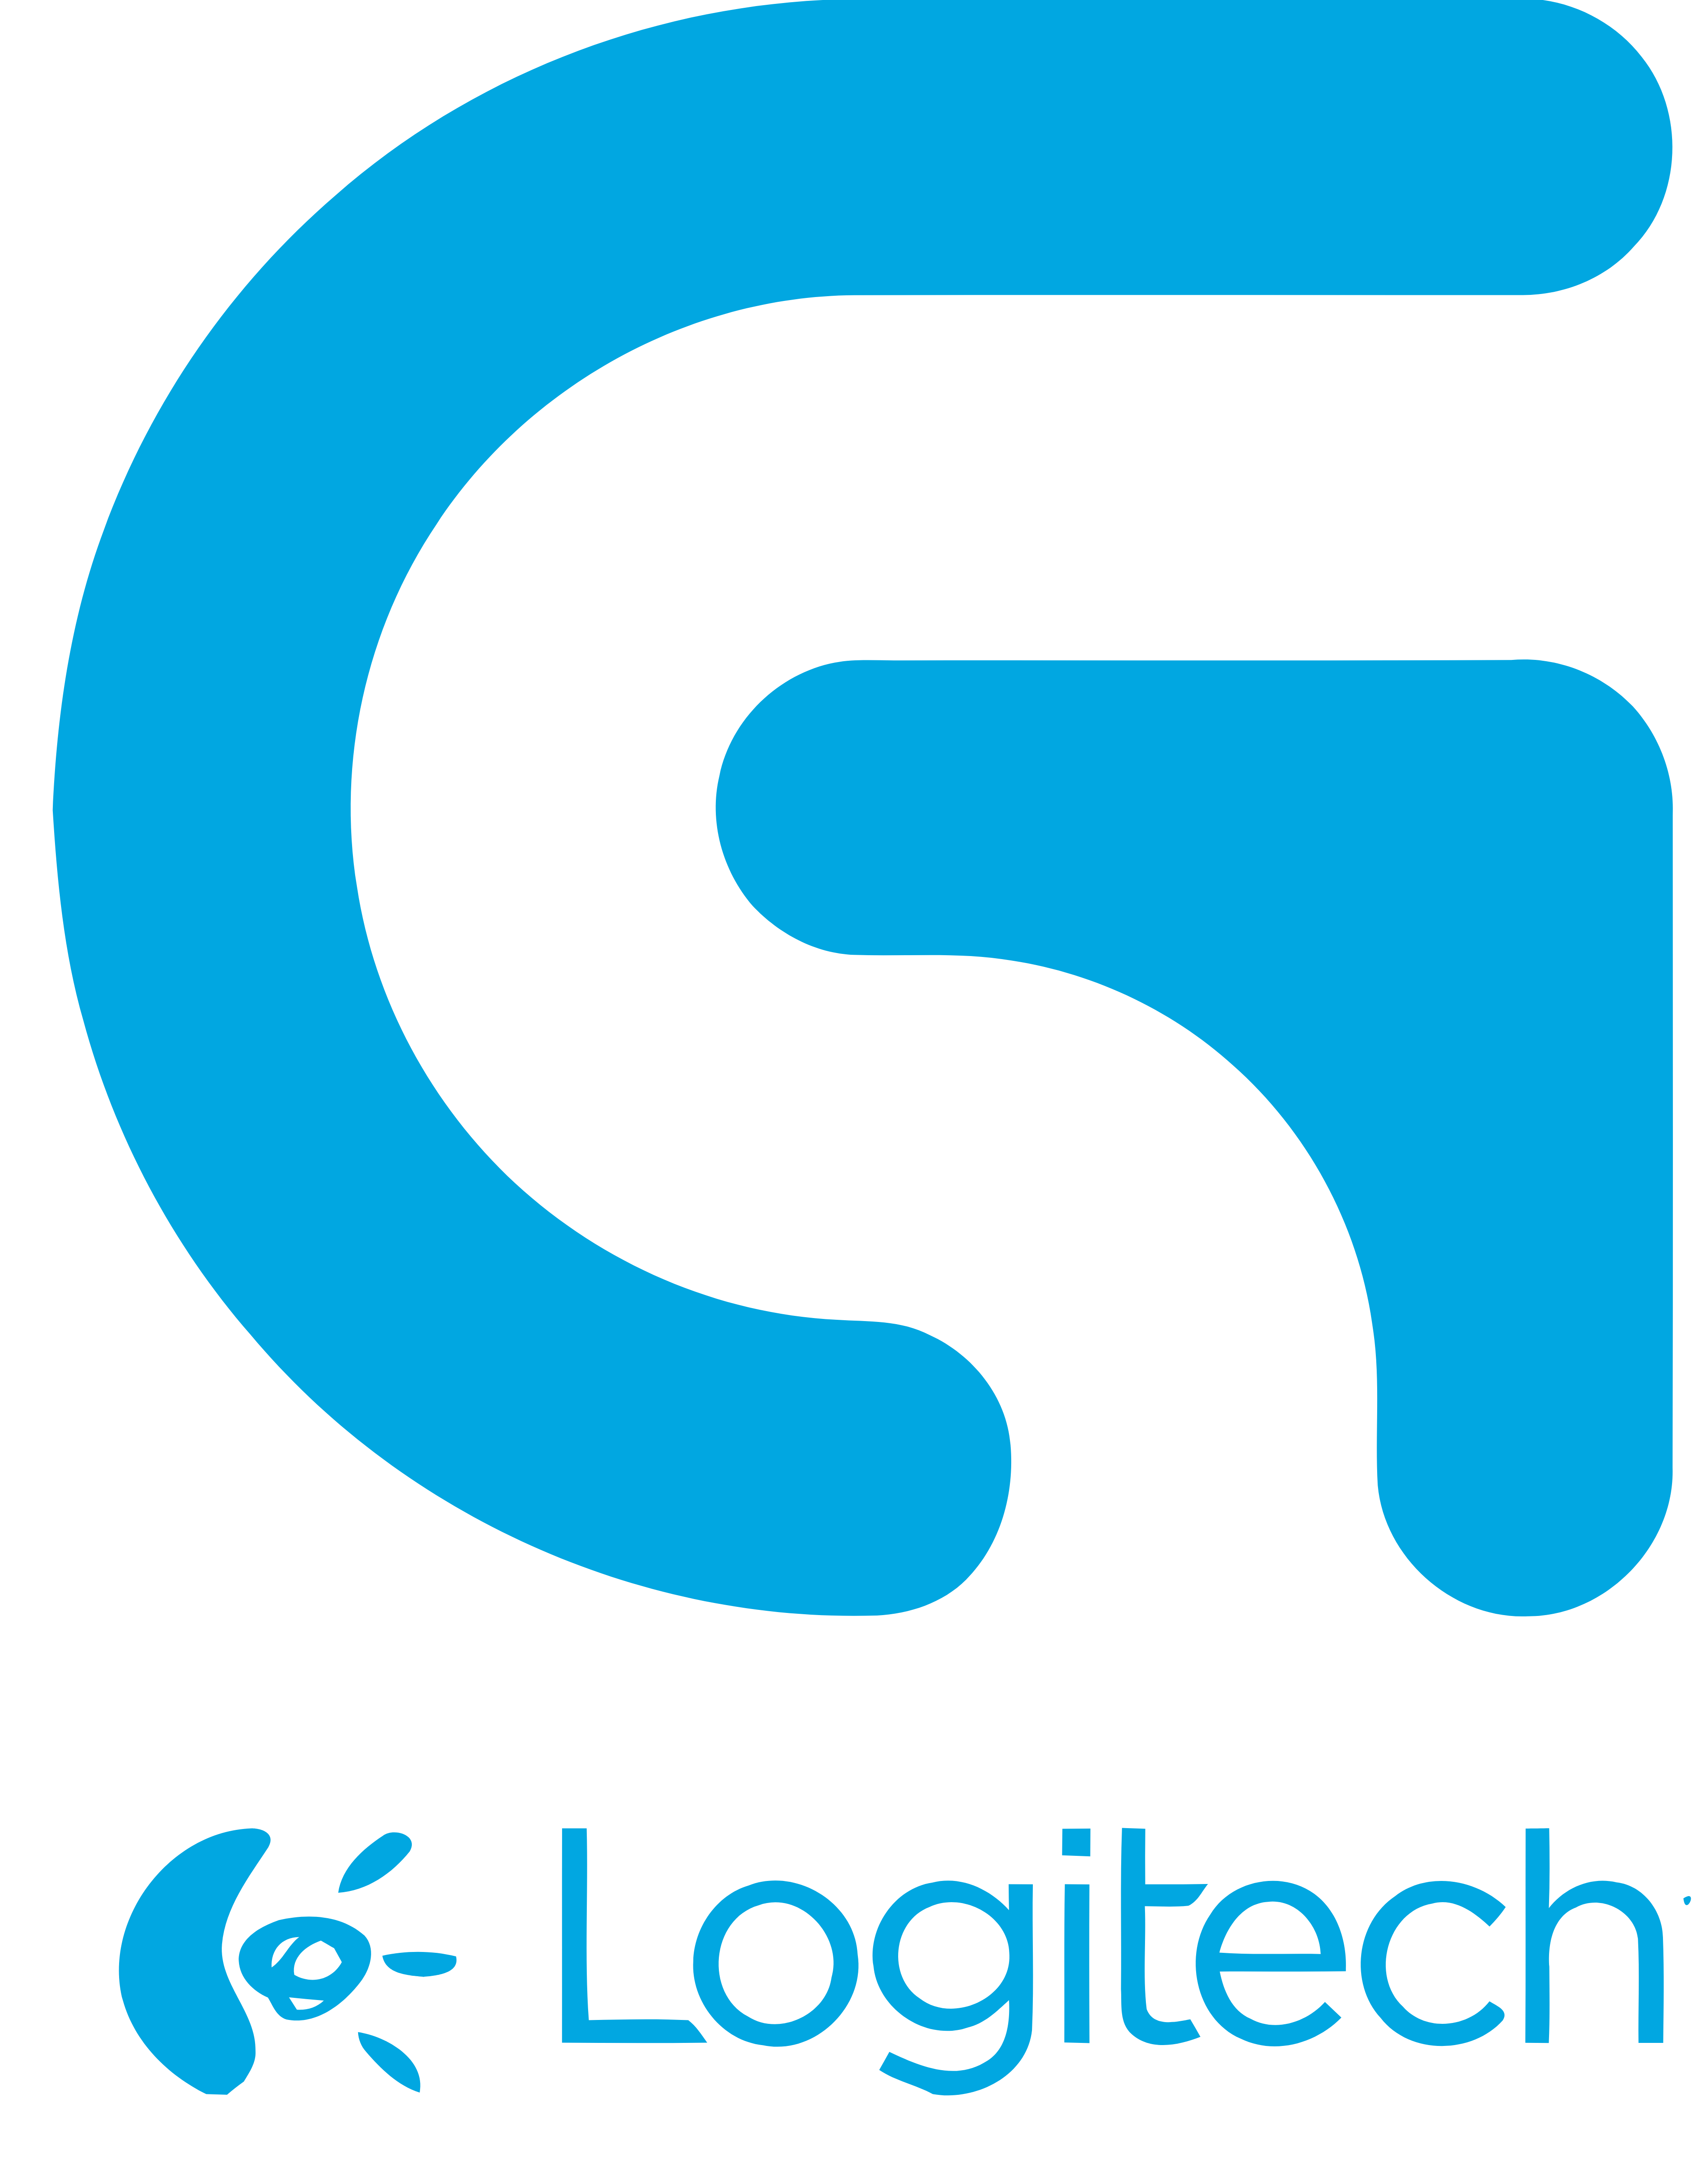 Logitech Logos Download Images